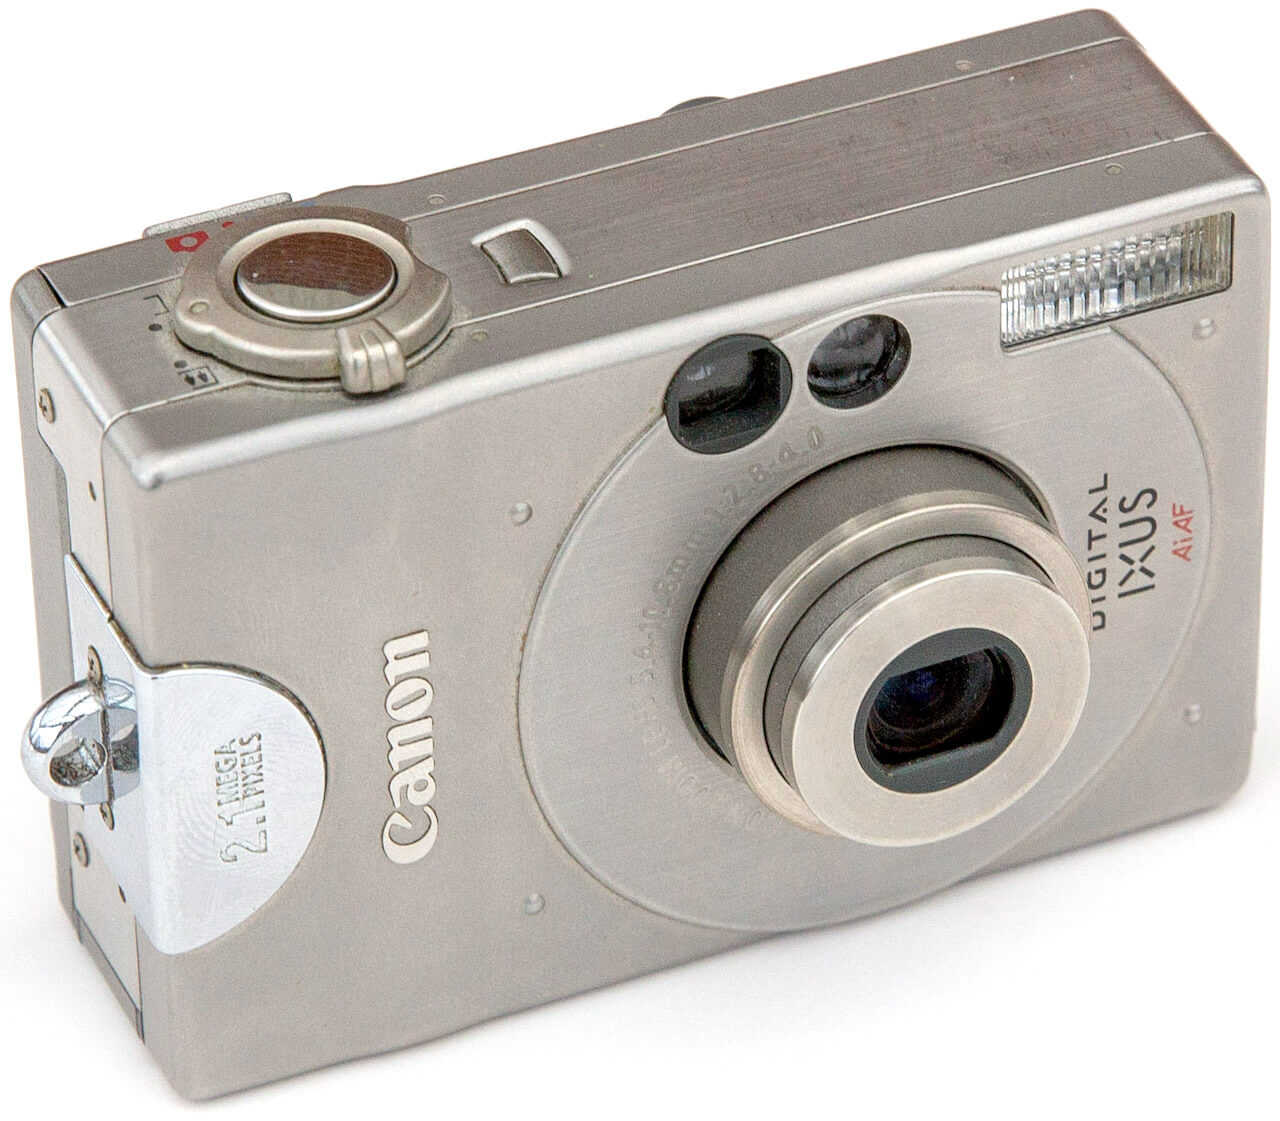 My first digital camera, the Canon Digital Ixus. (161-138)